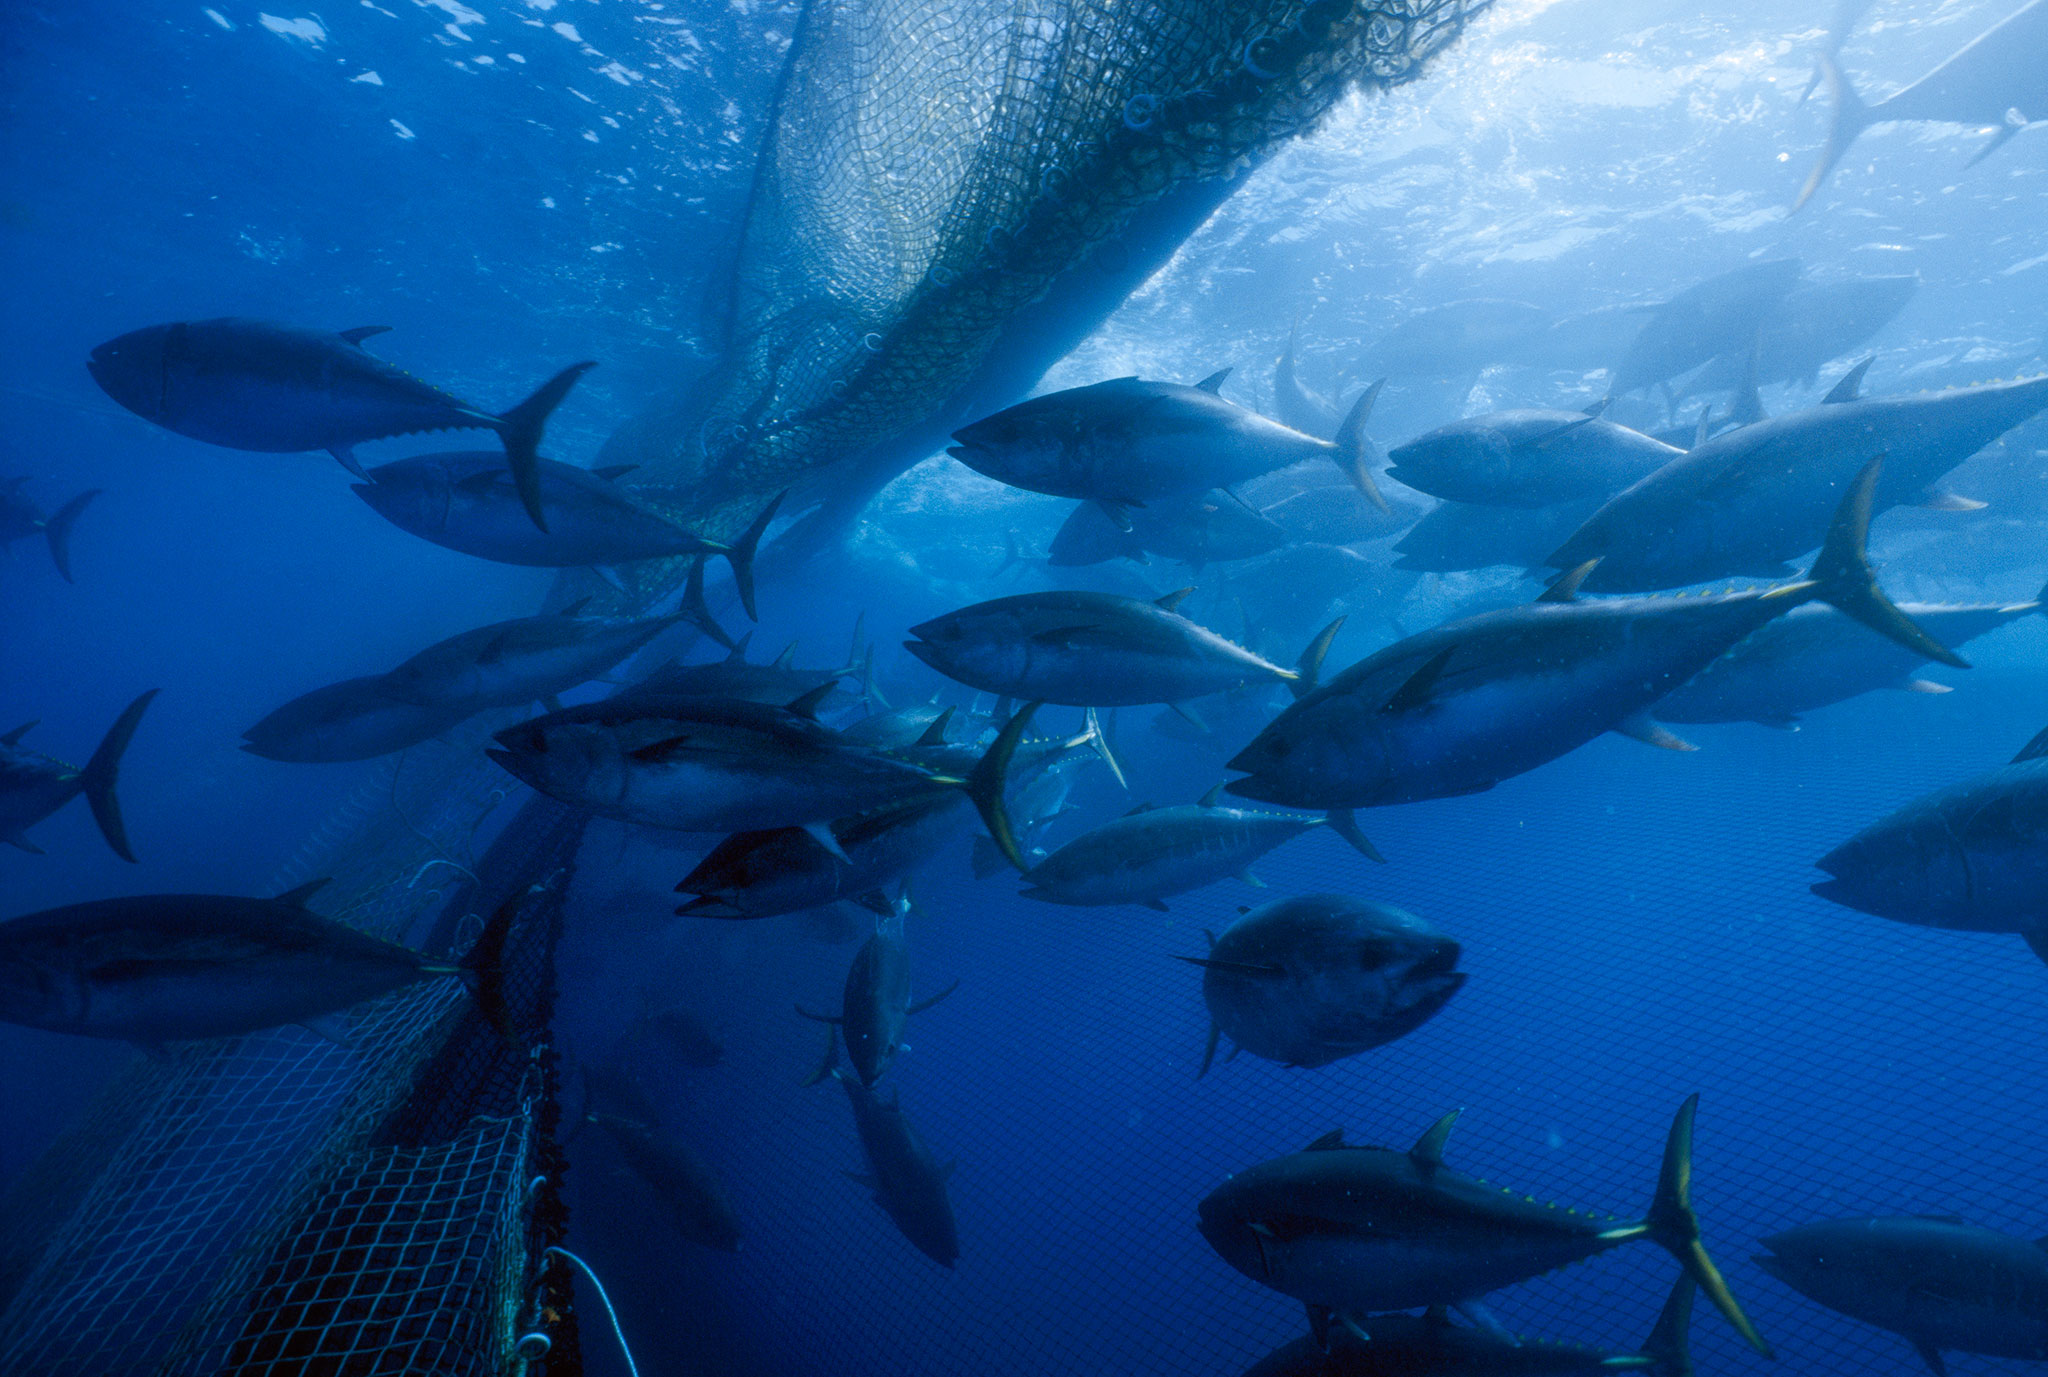 COsta Rica tuna fleet